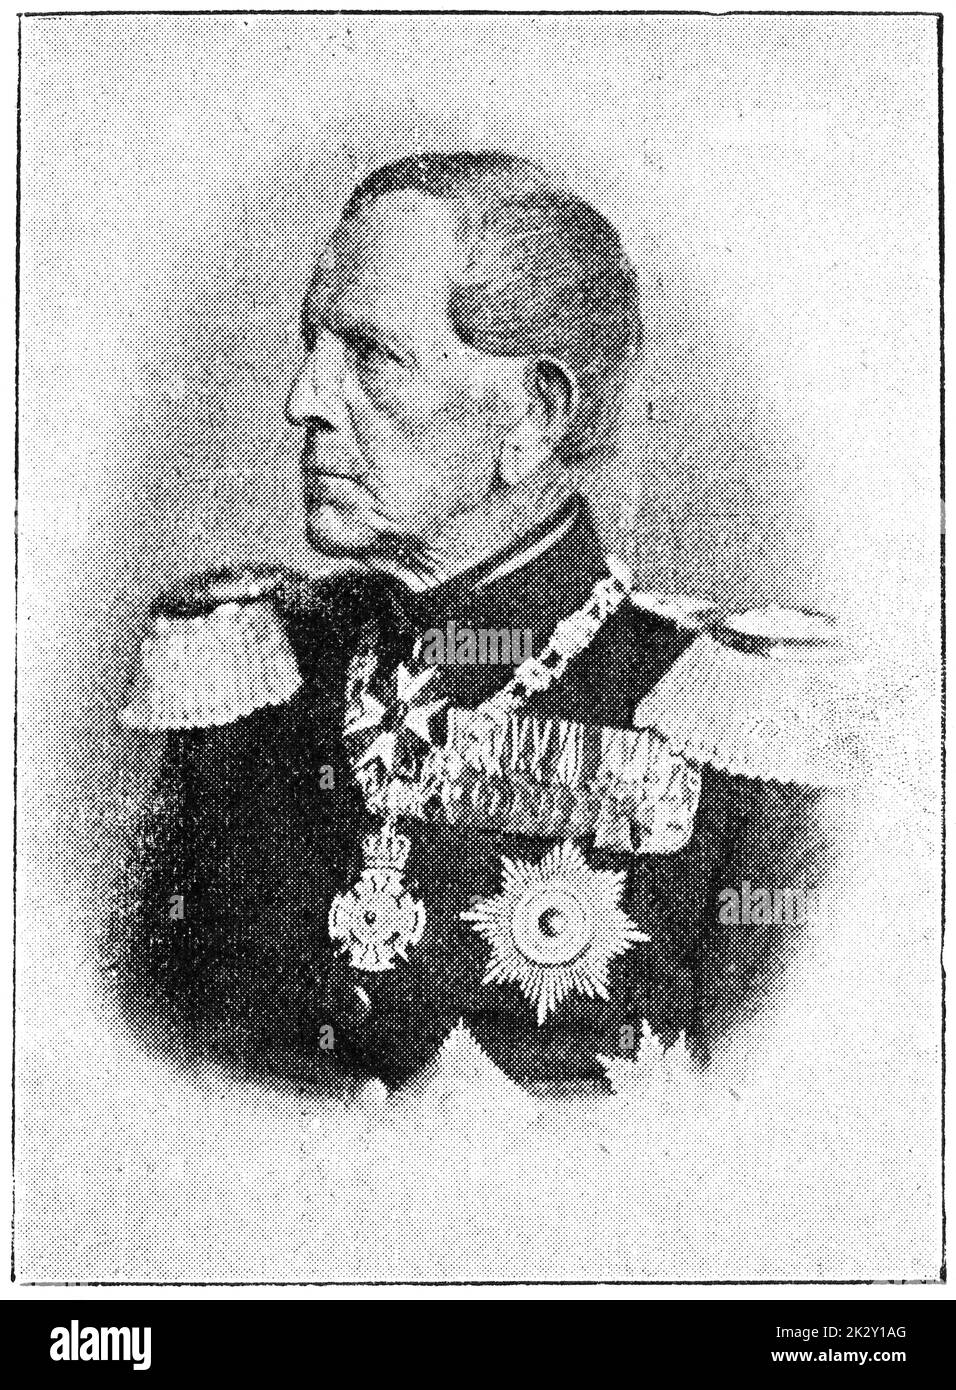 Portrait of Graf Helmuth Karl Bernhard von Moltke - a Prussian field marshal. Illustration of the 19th century. Germany. White background. Stock Photo